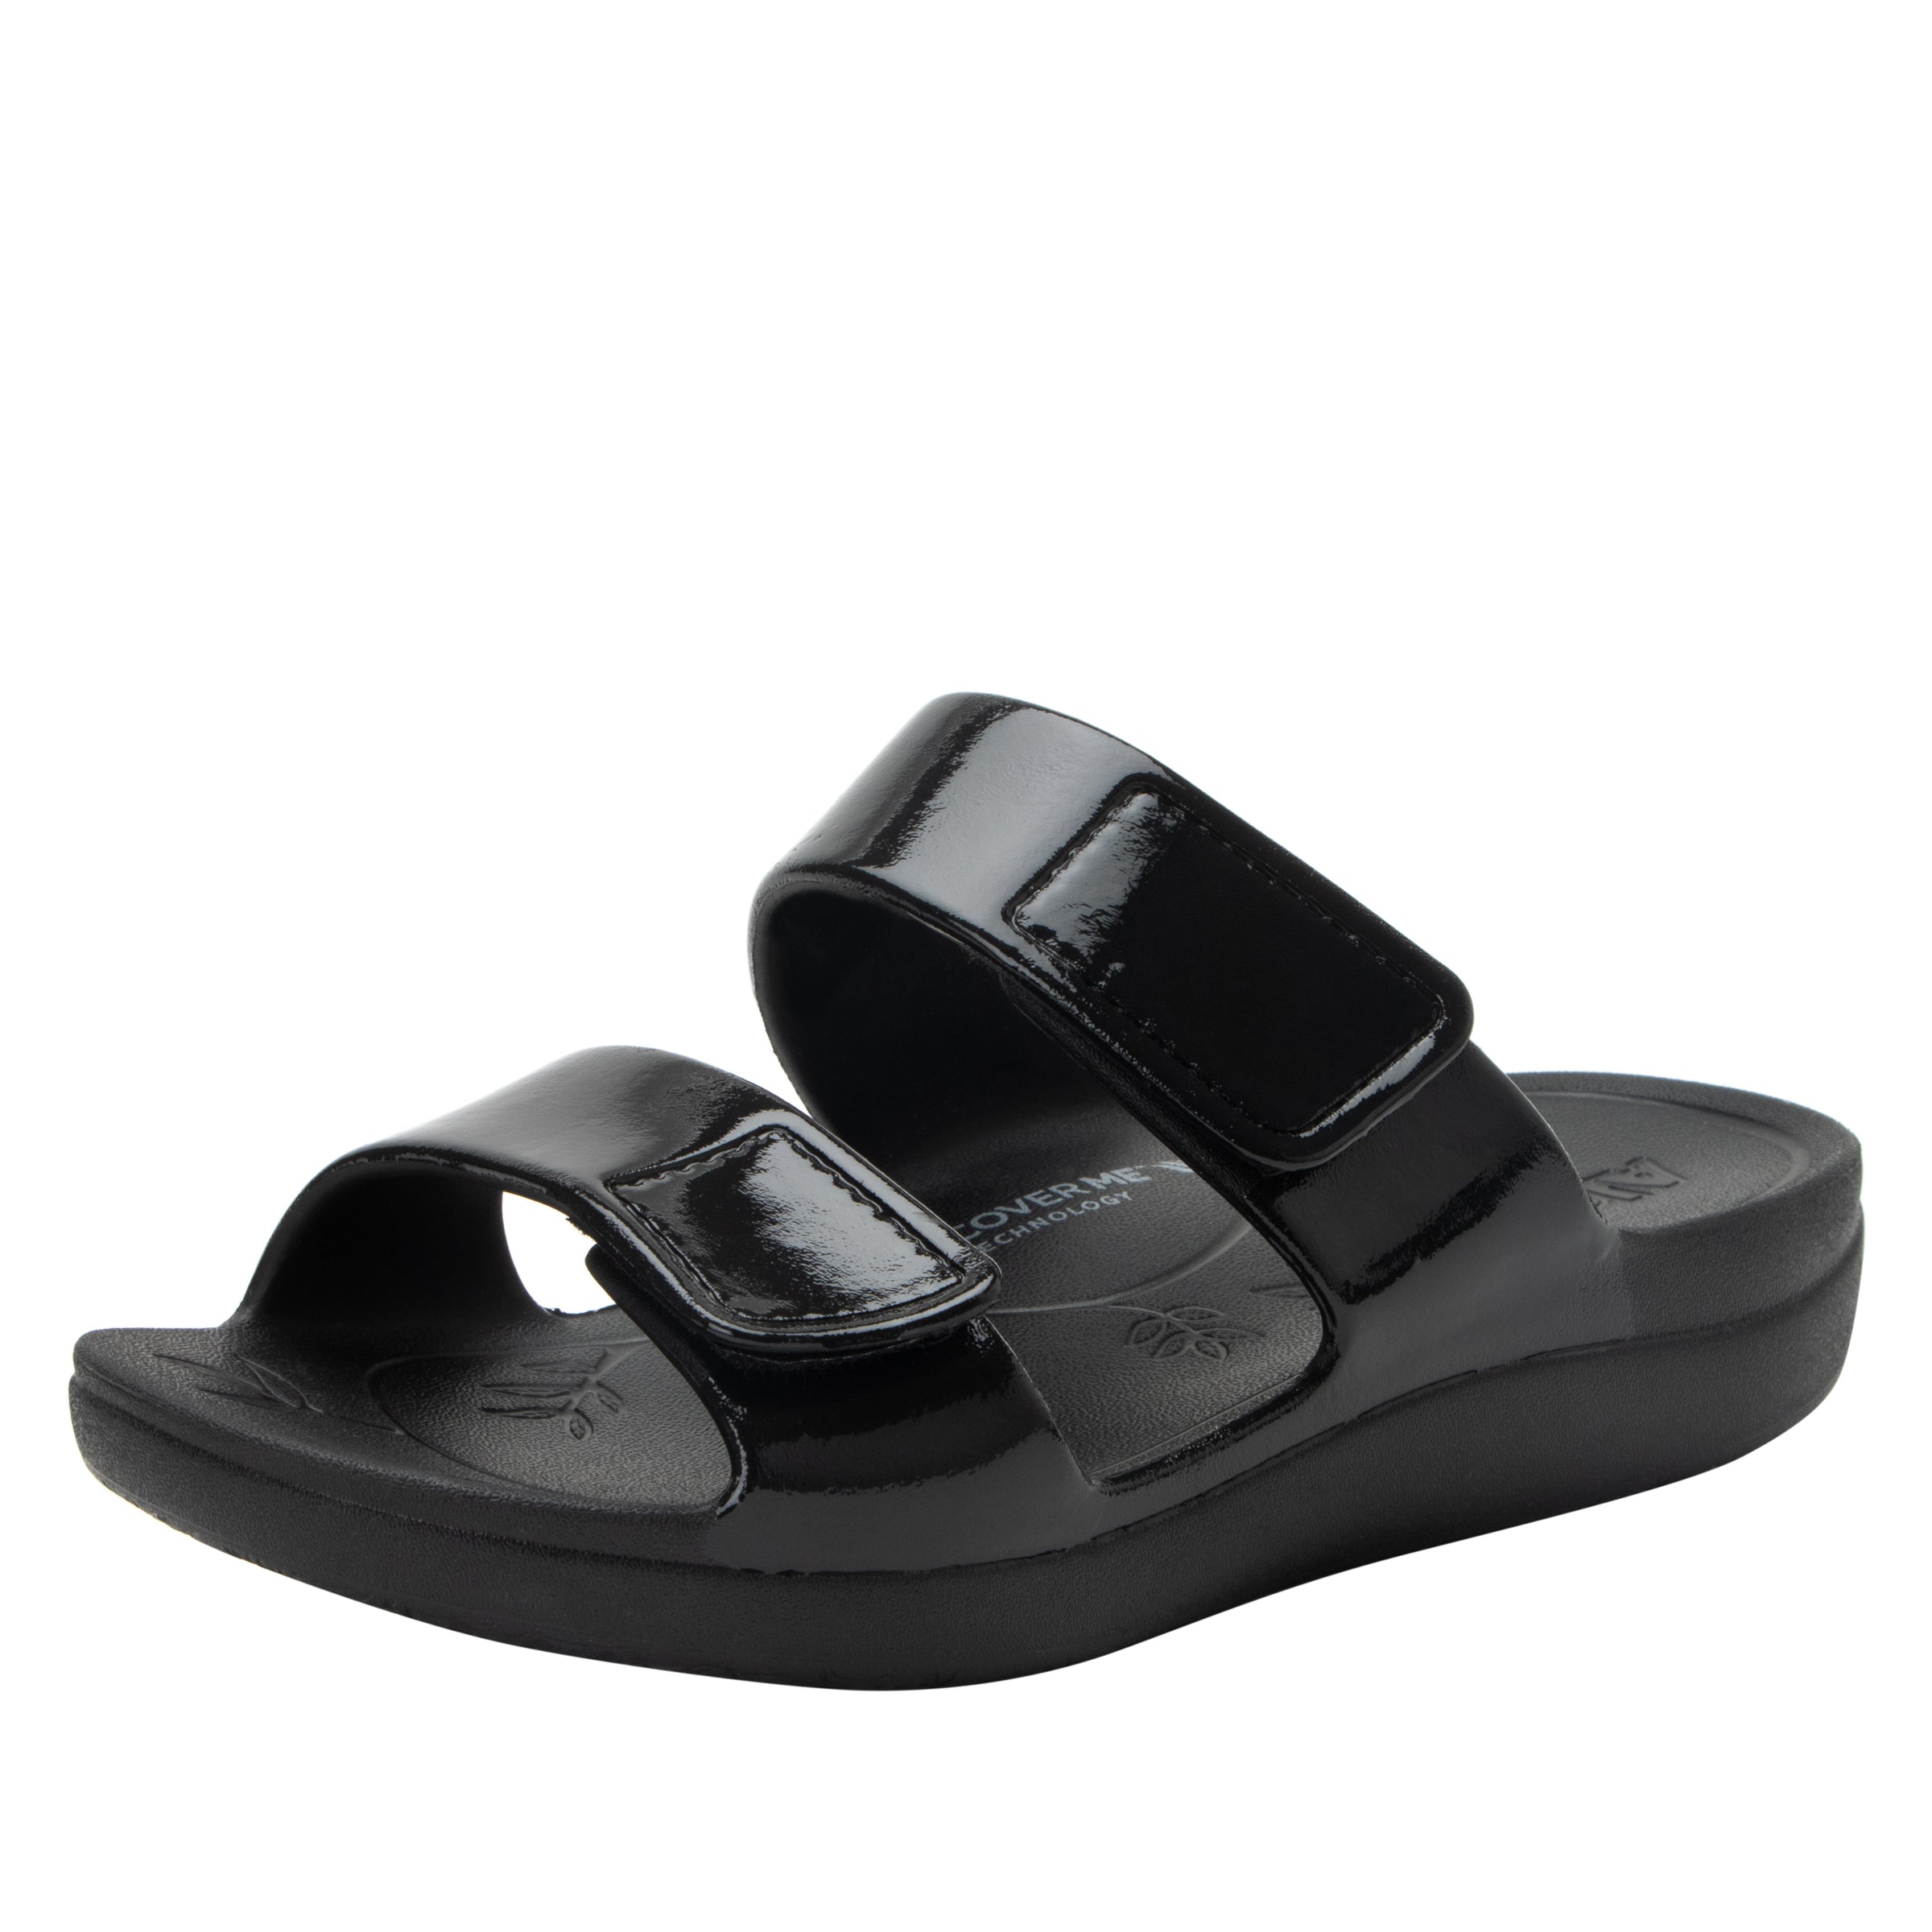 Orbyt Black Gloss Sandal - Alegria Shoes